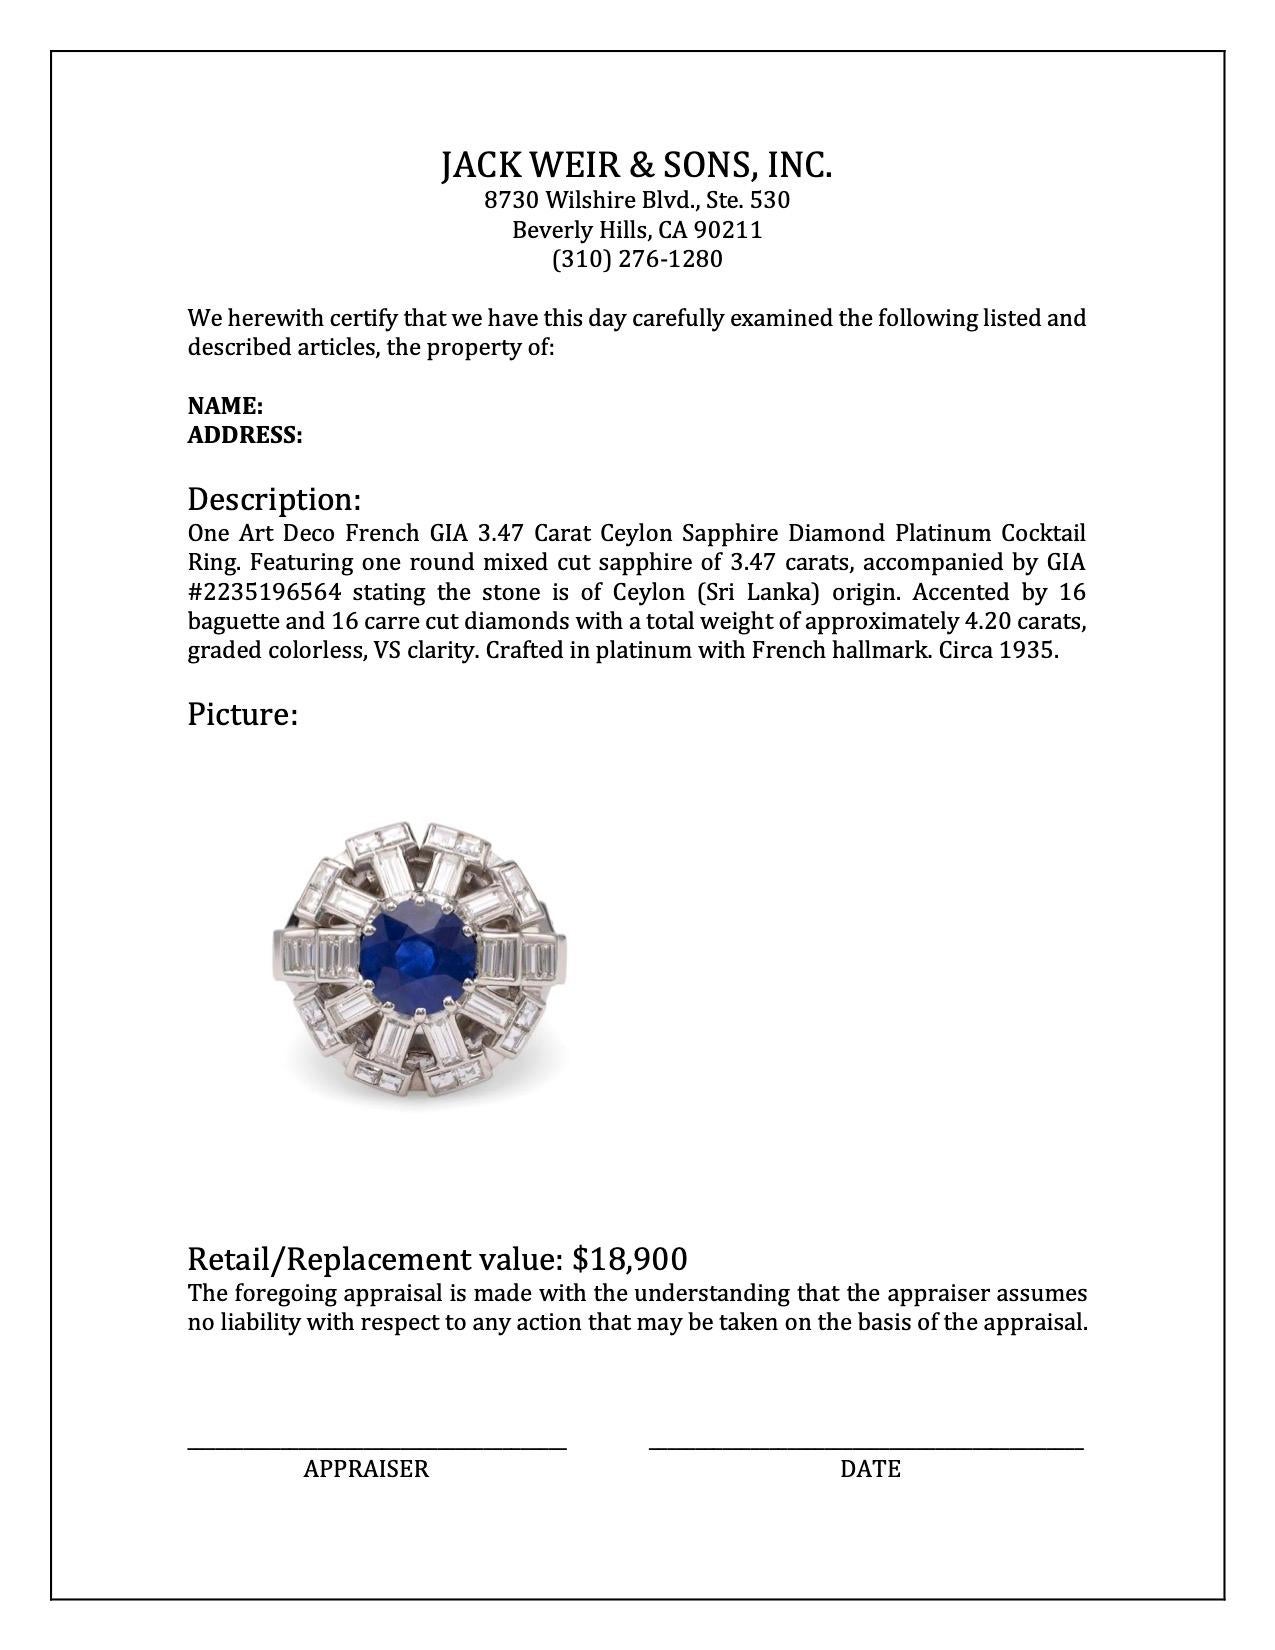 Women's or Men's Art Deco French GIA 3.47 Carat Ceylon Sapphire Diamond Platinum Cocktail Ring For Sale